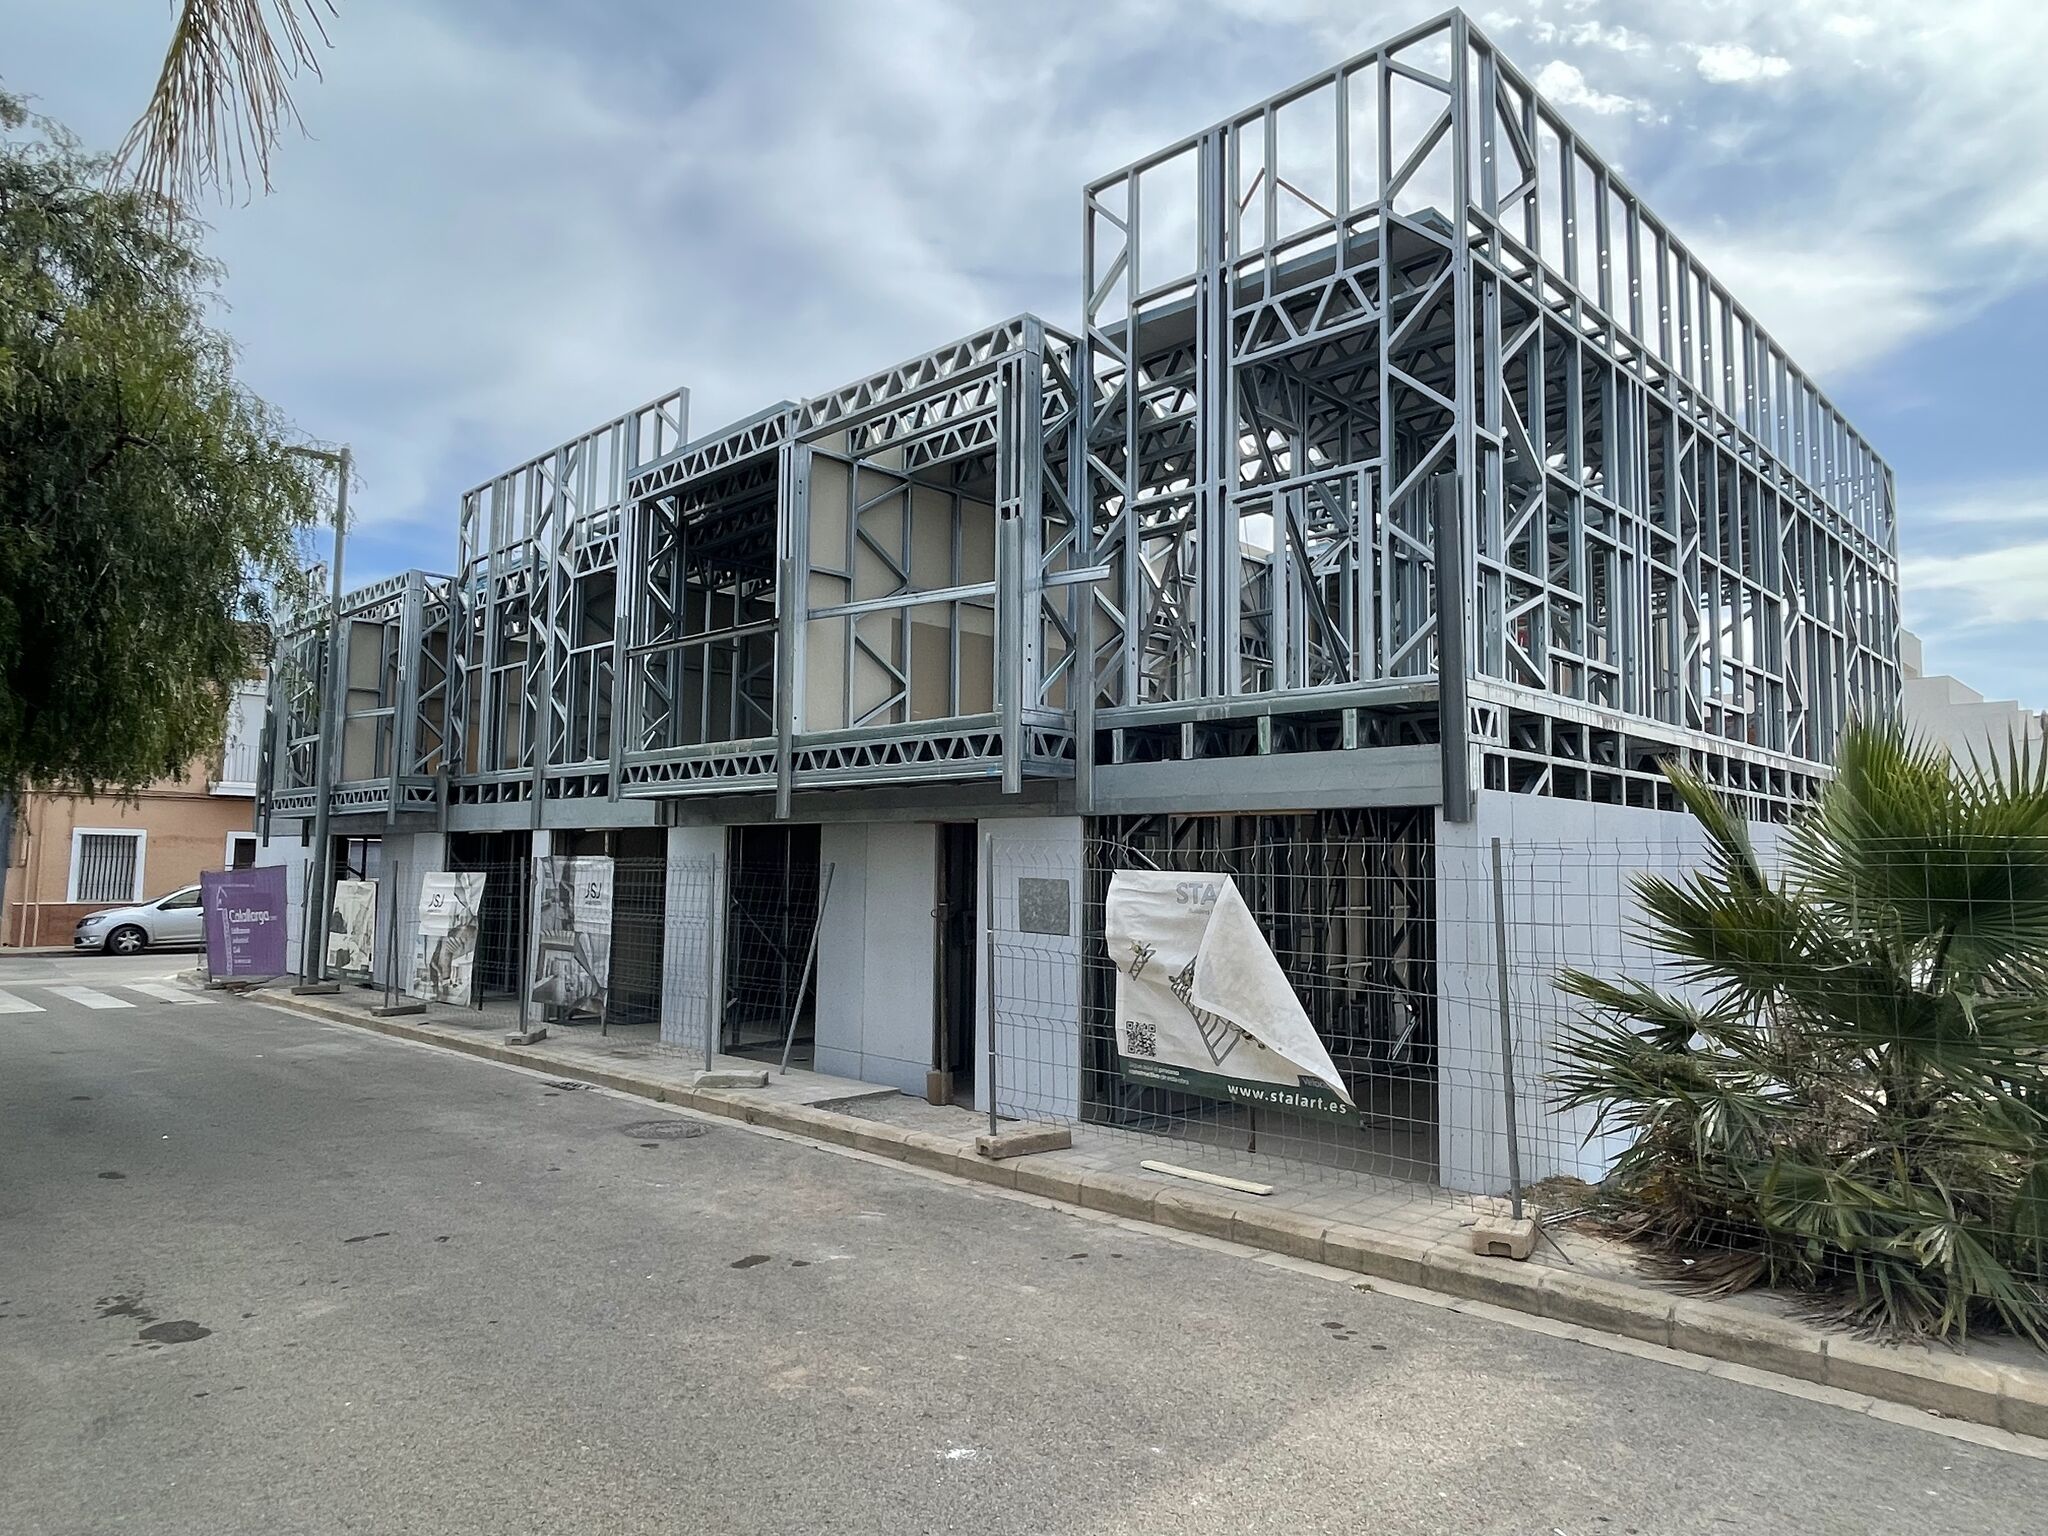 construccion tipo steel frame con perfil colaborante para viviendas en Foios, valencia. españa con perfil INCO 70.4 by Incoperfil